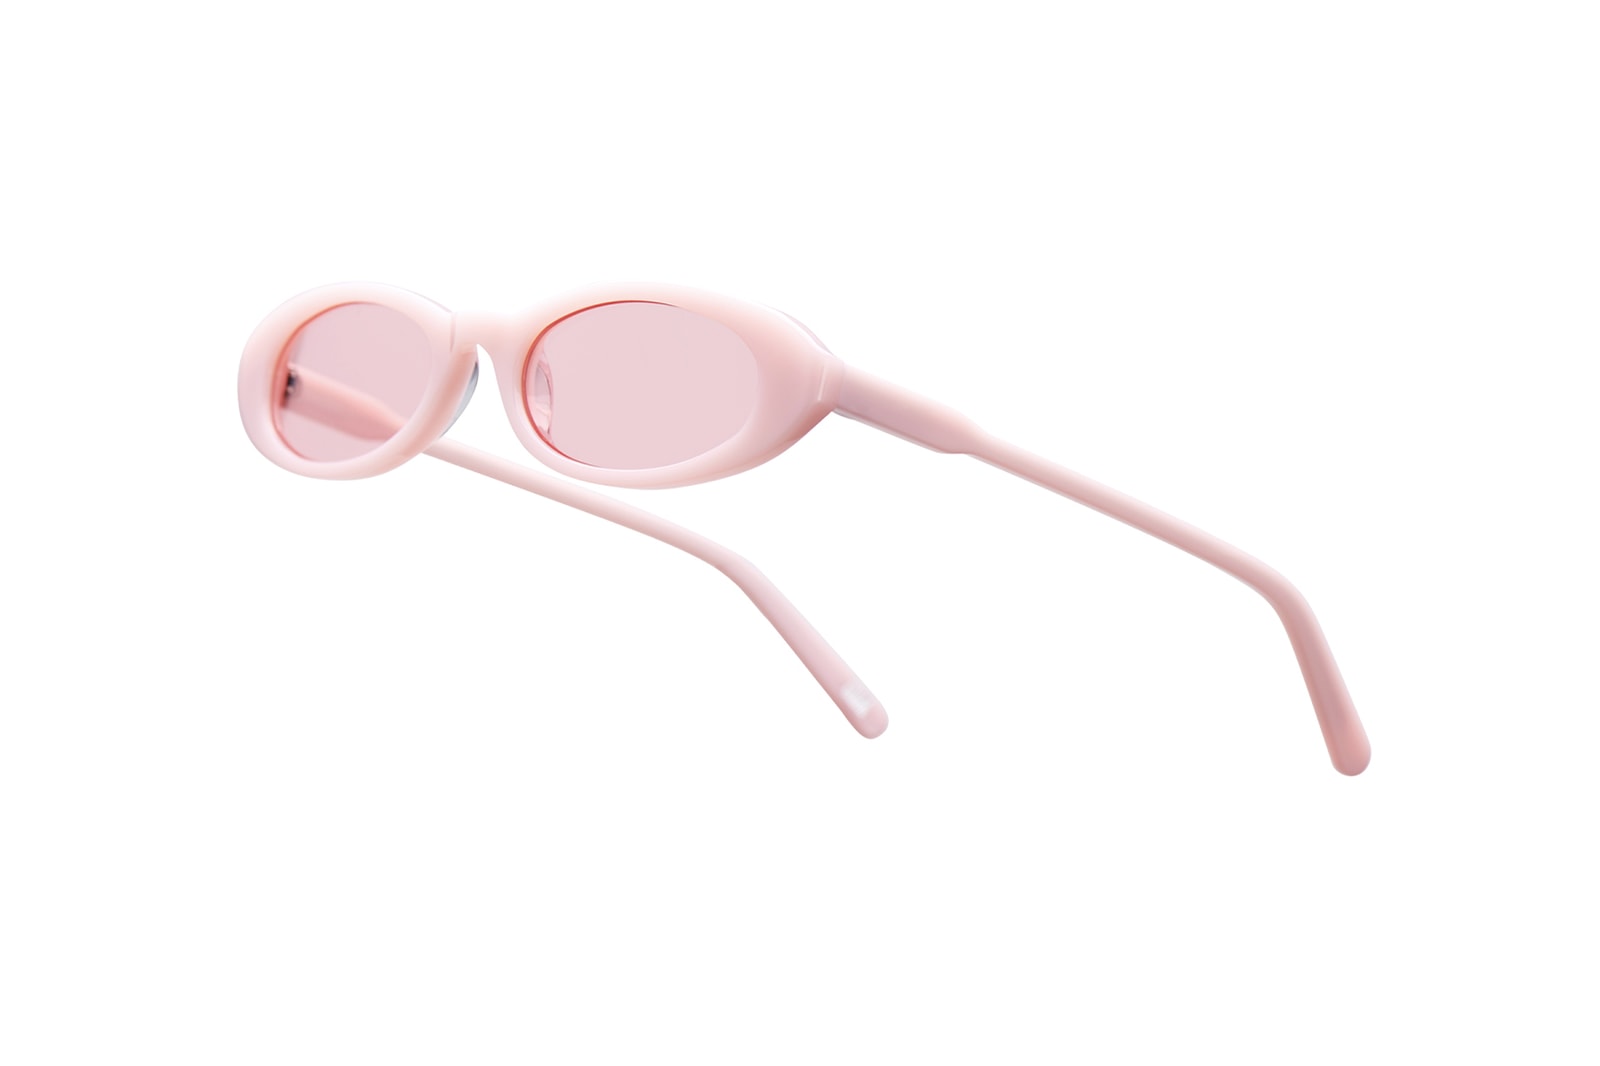 CHIMI eyewear round oval sunglasses brand mini small sci fi futuristic shades affordable stockholm label joel ighe pink white black unisex mens womens where to buy